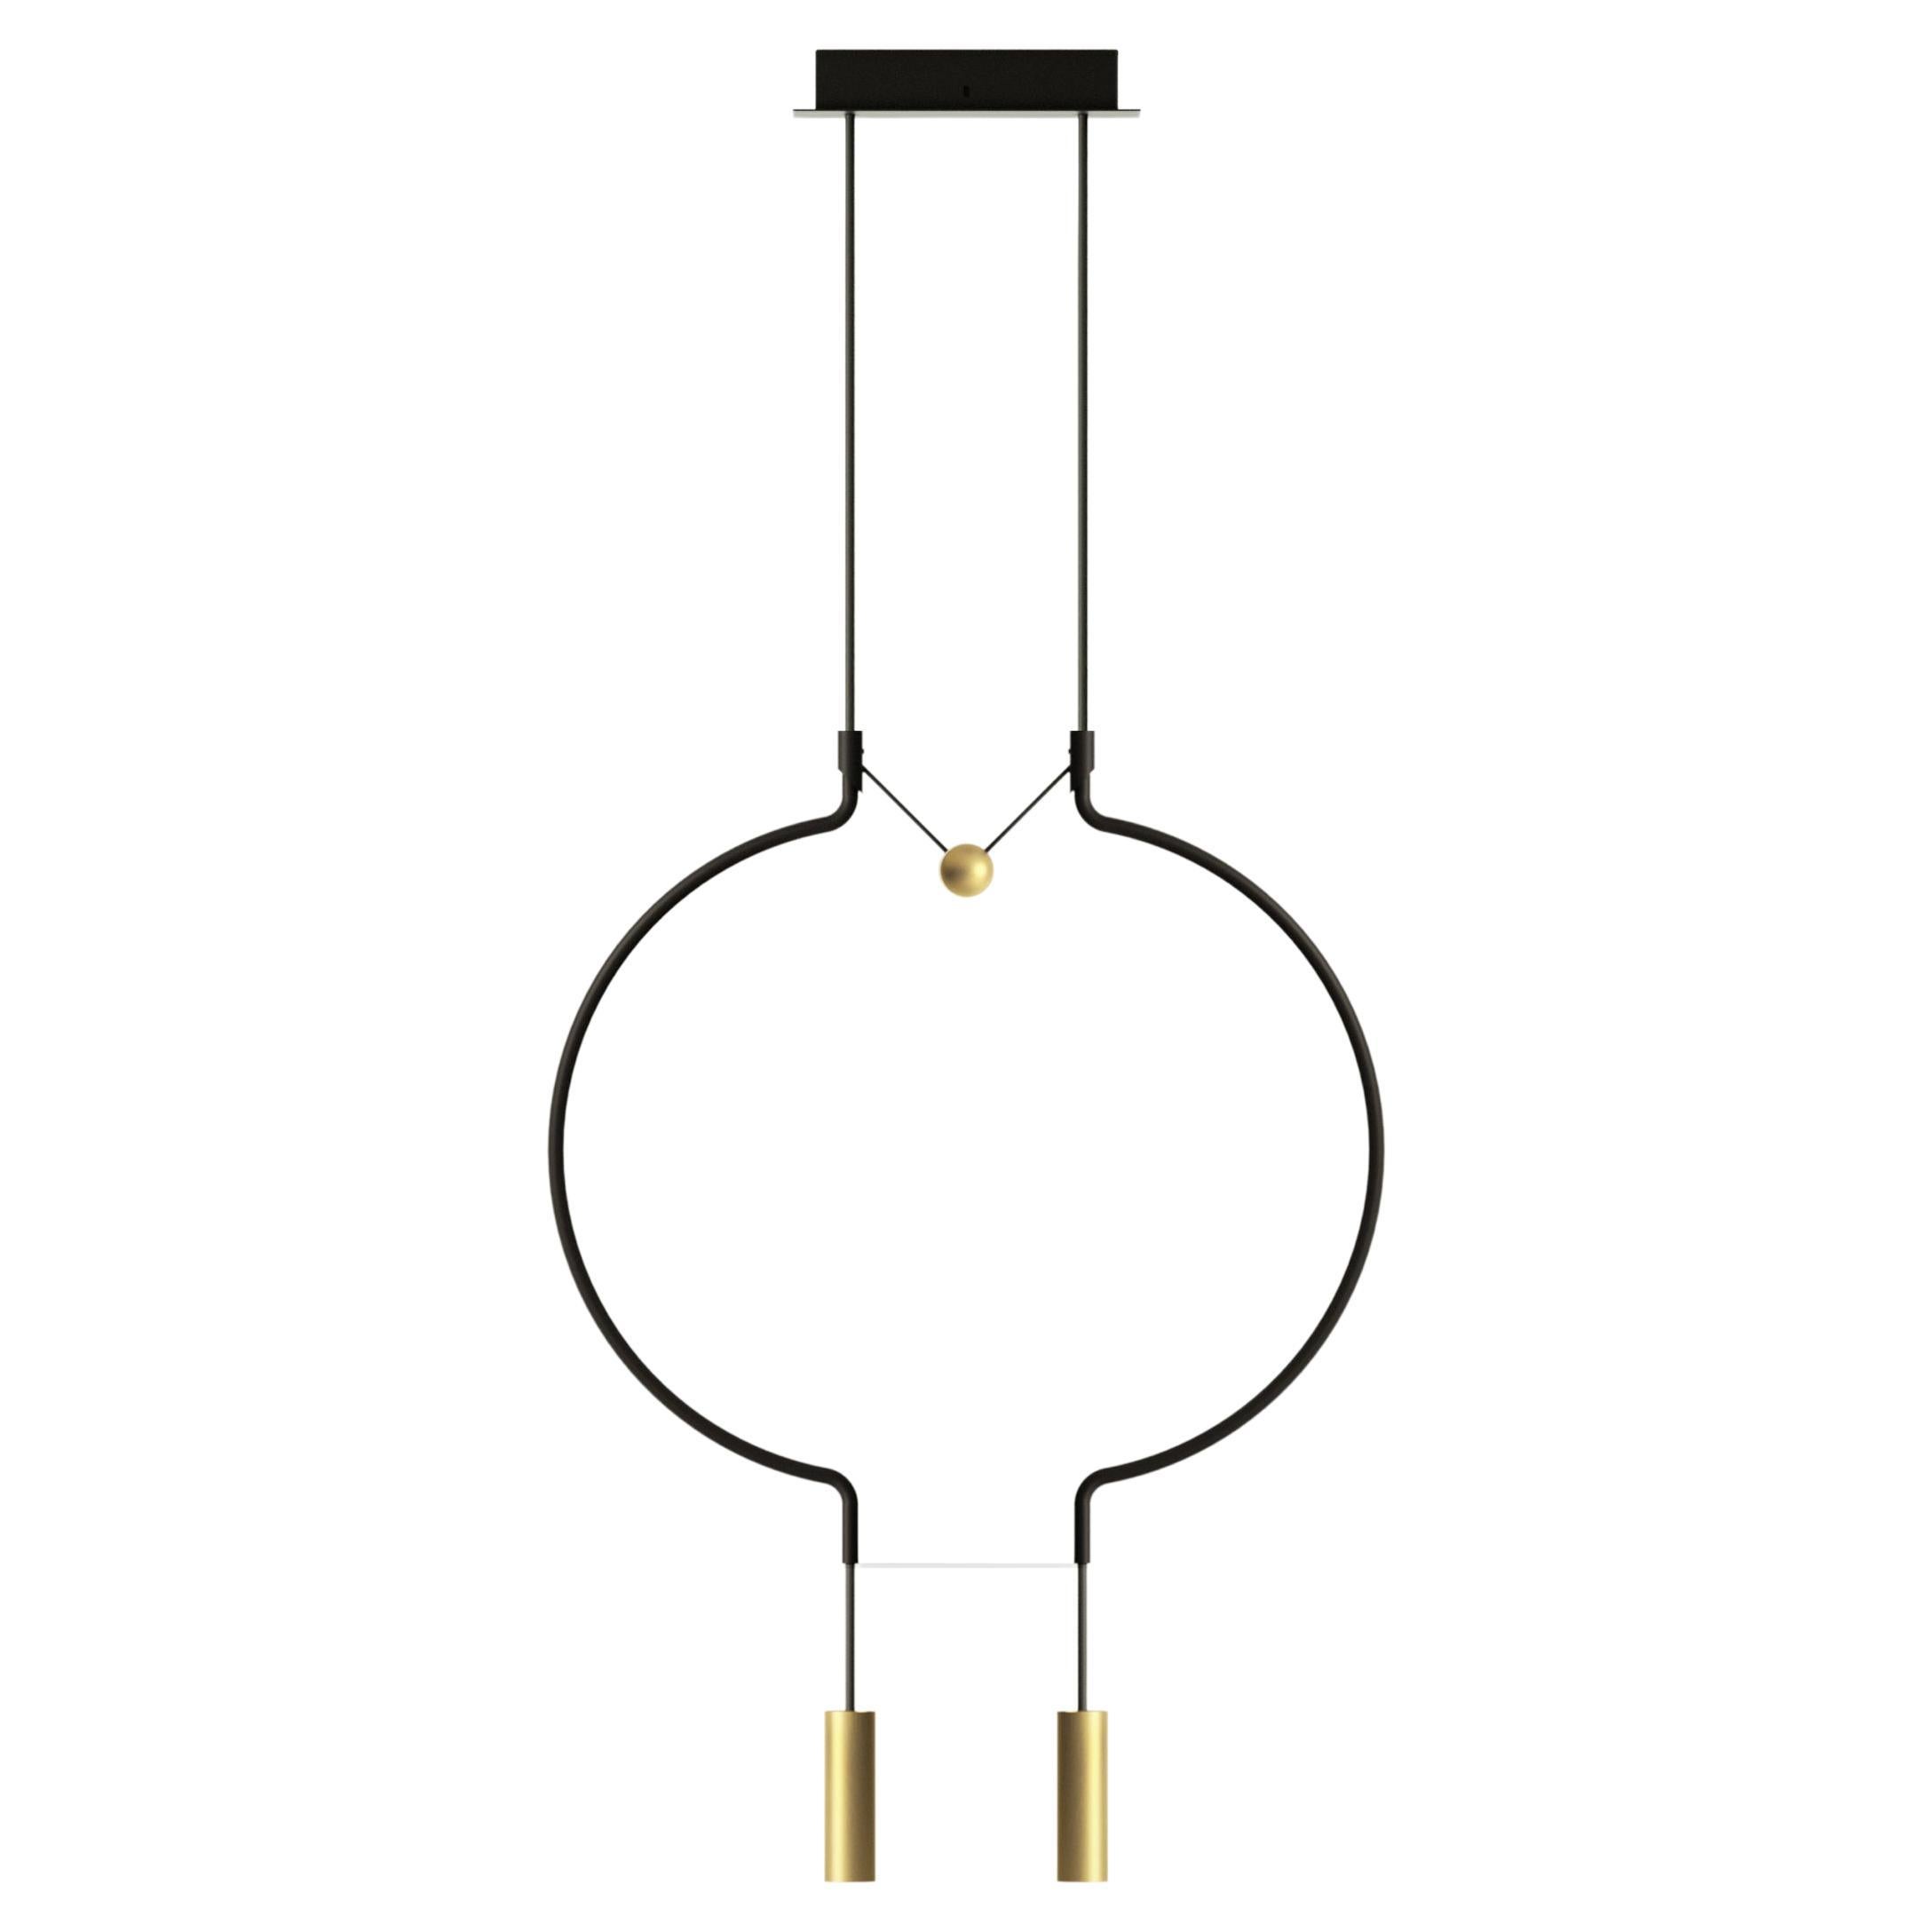 Axolight Liaison Model P2 Pendant Lamp in Black/Gold by Sara Moroni